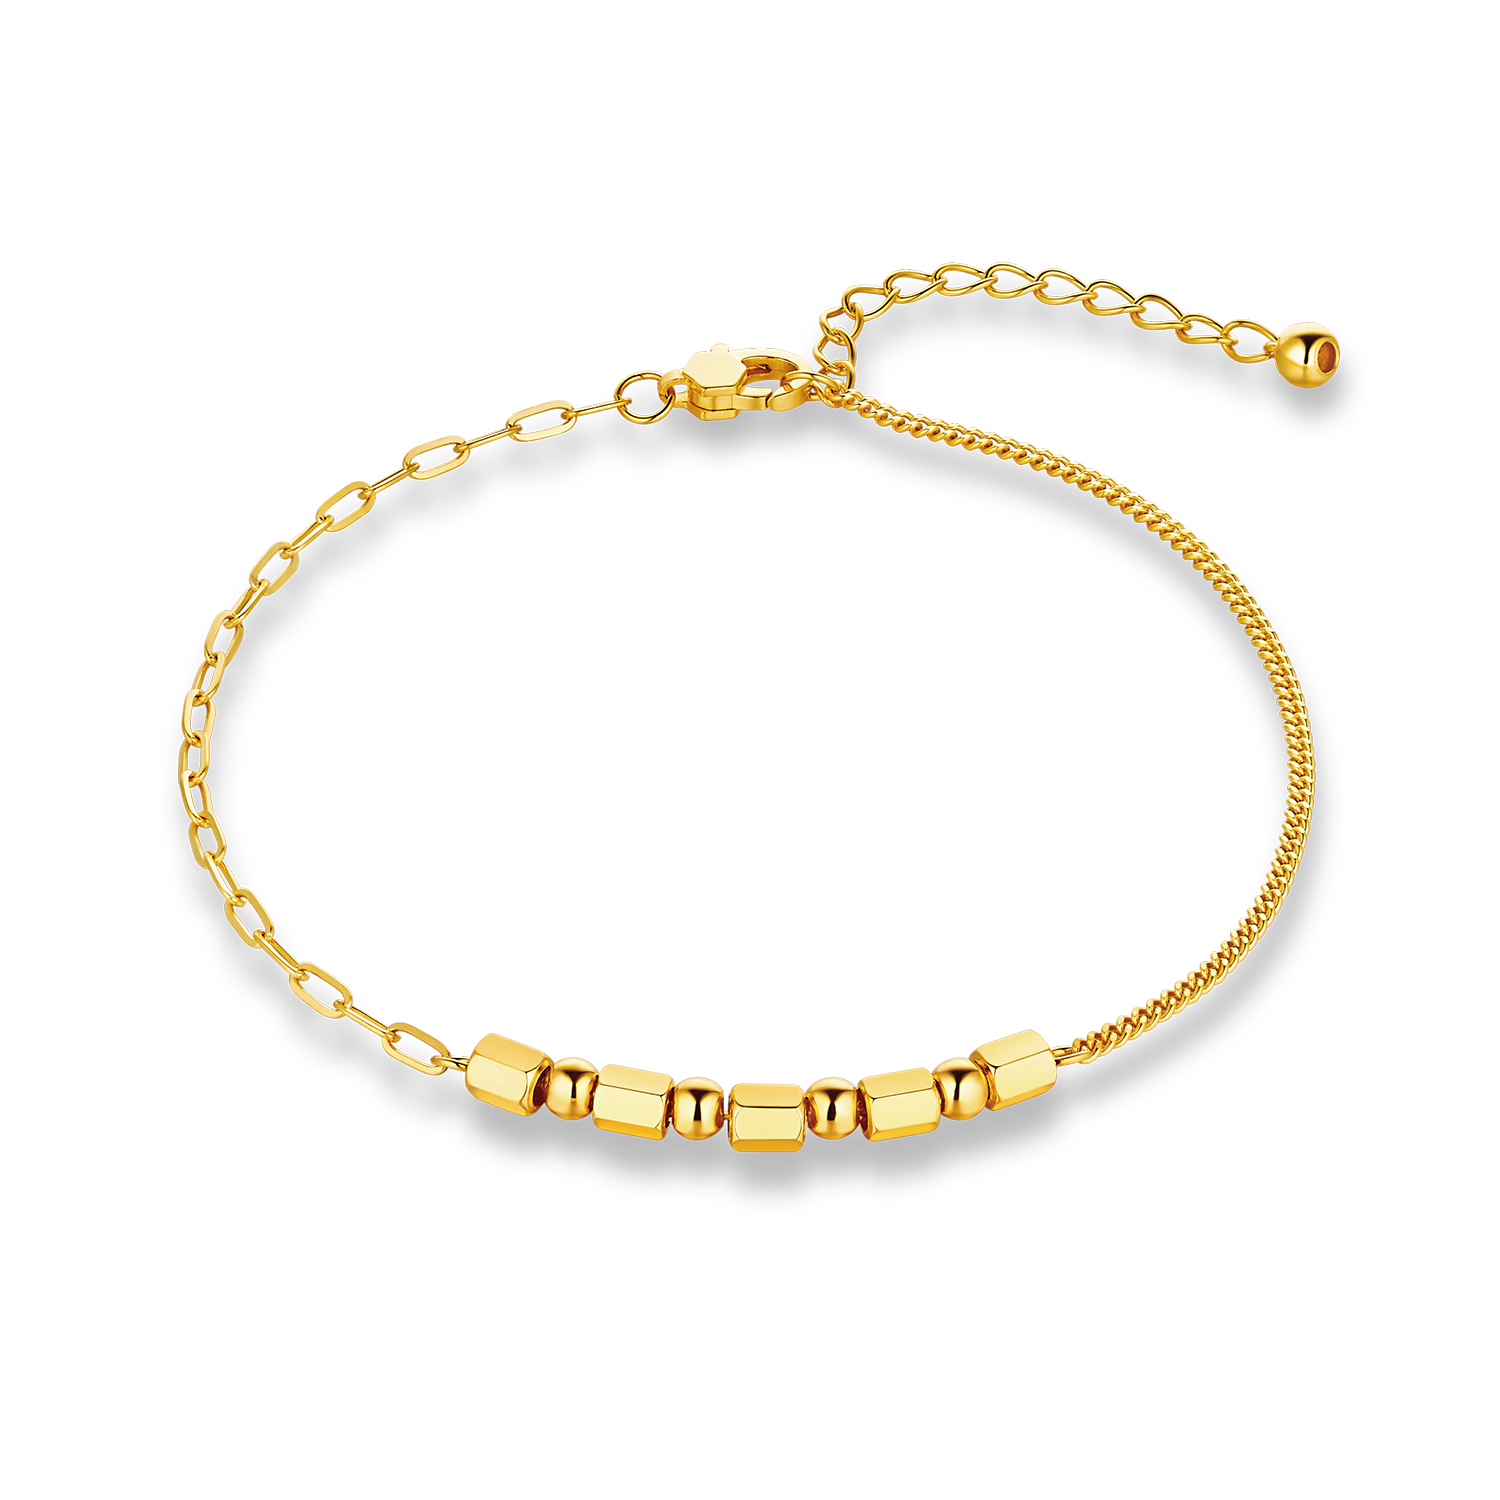 Goldstyle "Joy of circle" Gold Bracelet